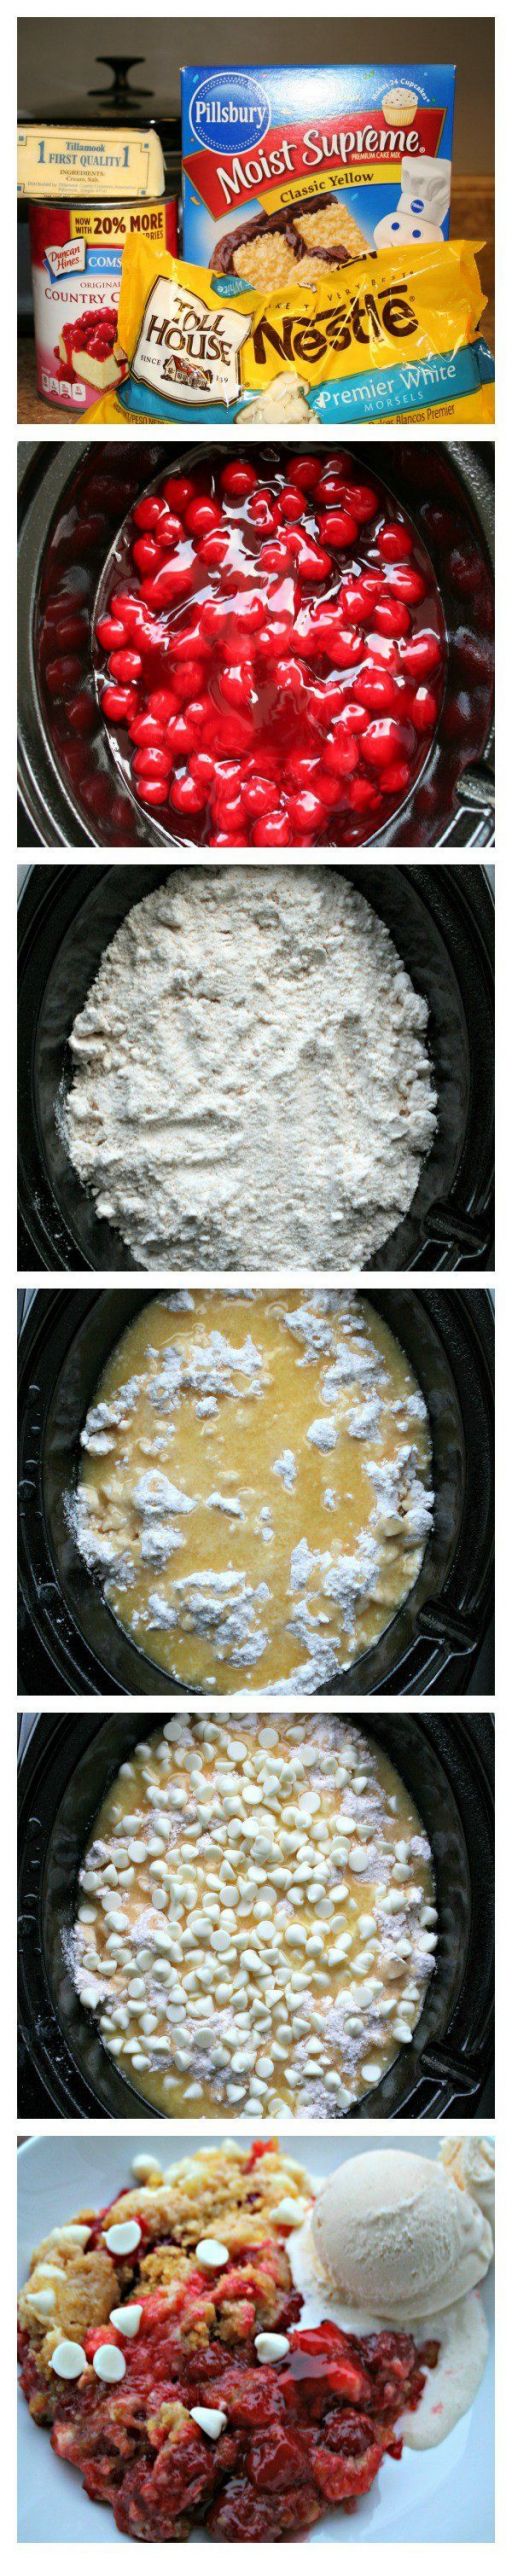 Slow Cooker Cake Recipes With Yellow Cake Mix
 White Chocolate Cherry Dump Cake Recipe